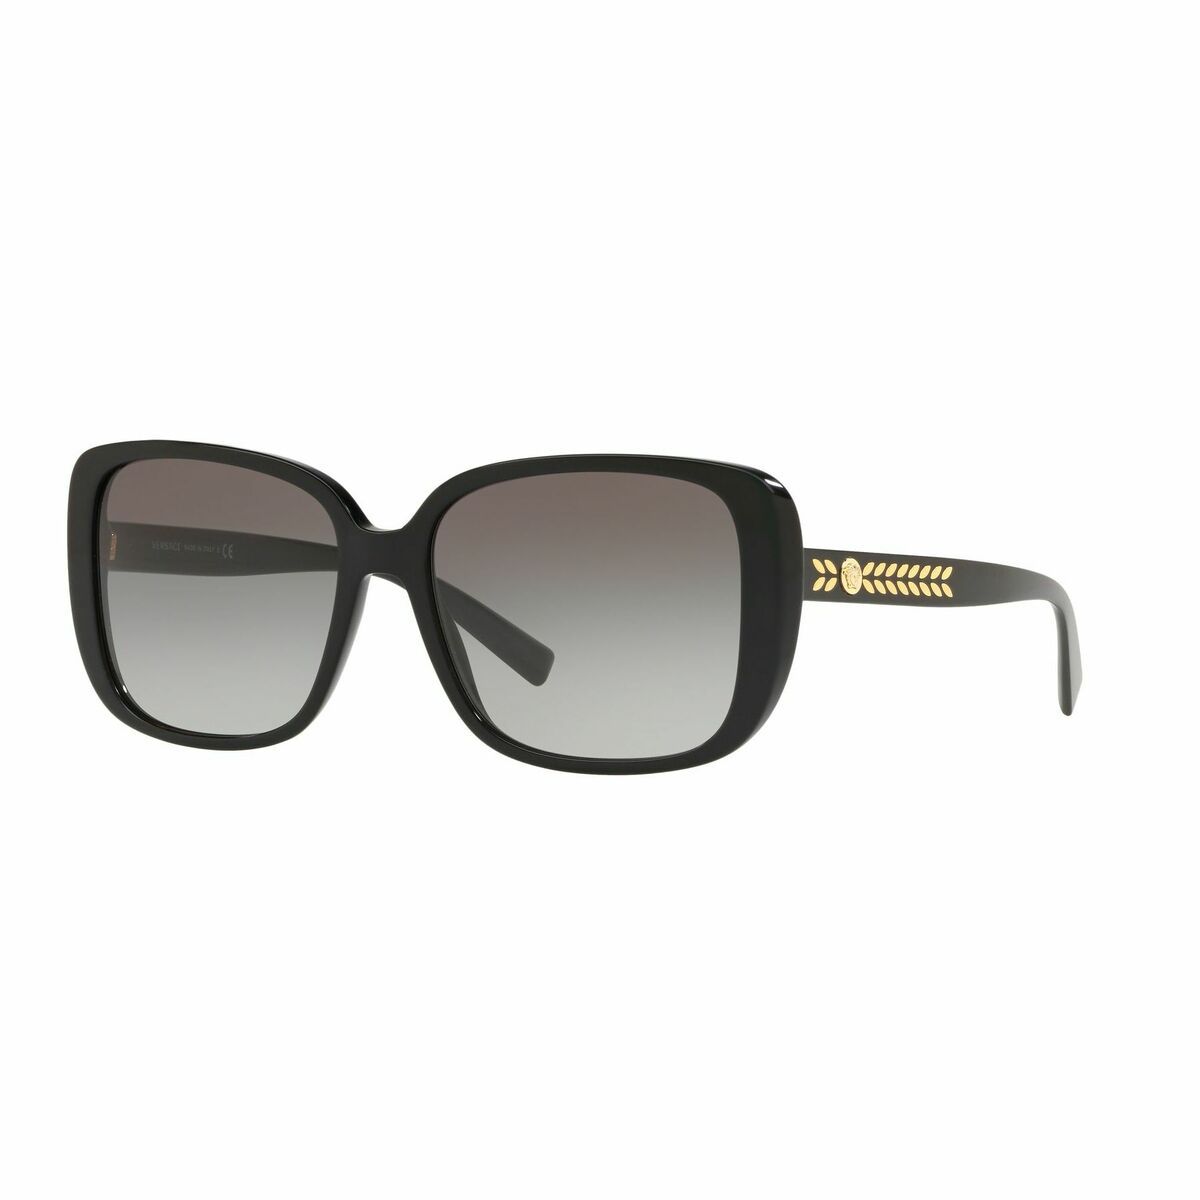 VE4357 Square Sunglasses GB1 11 - size 56